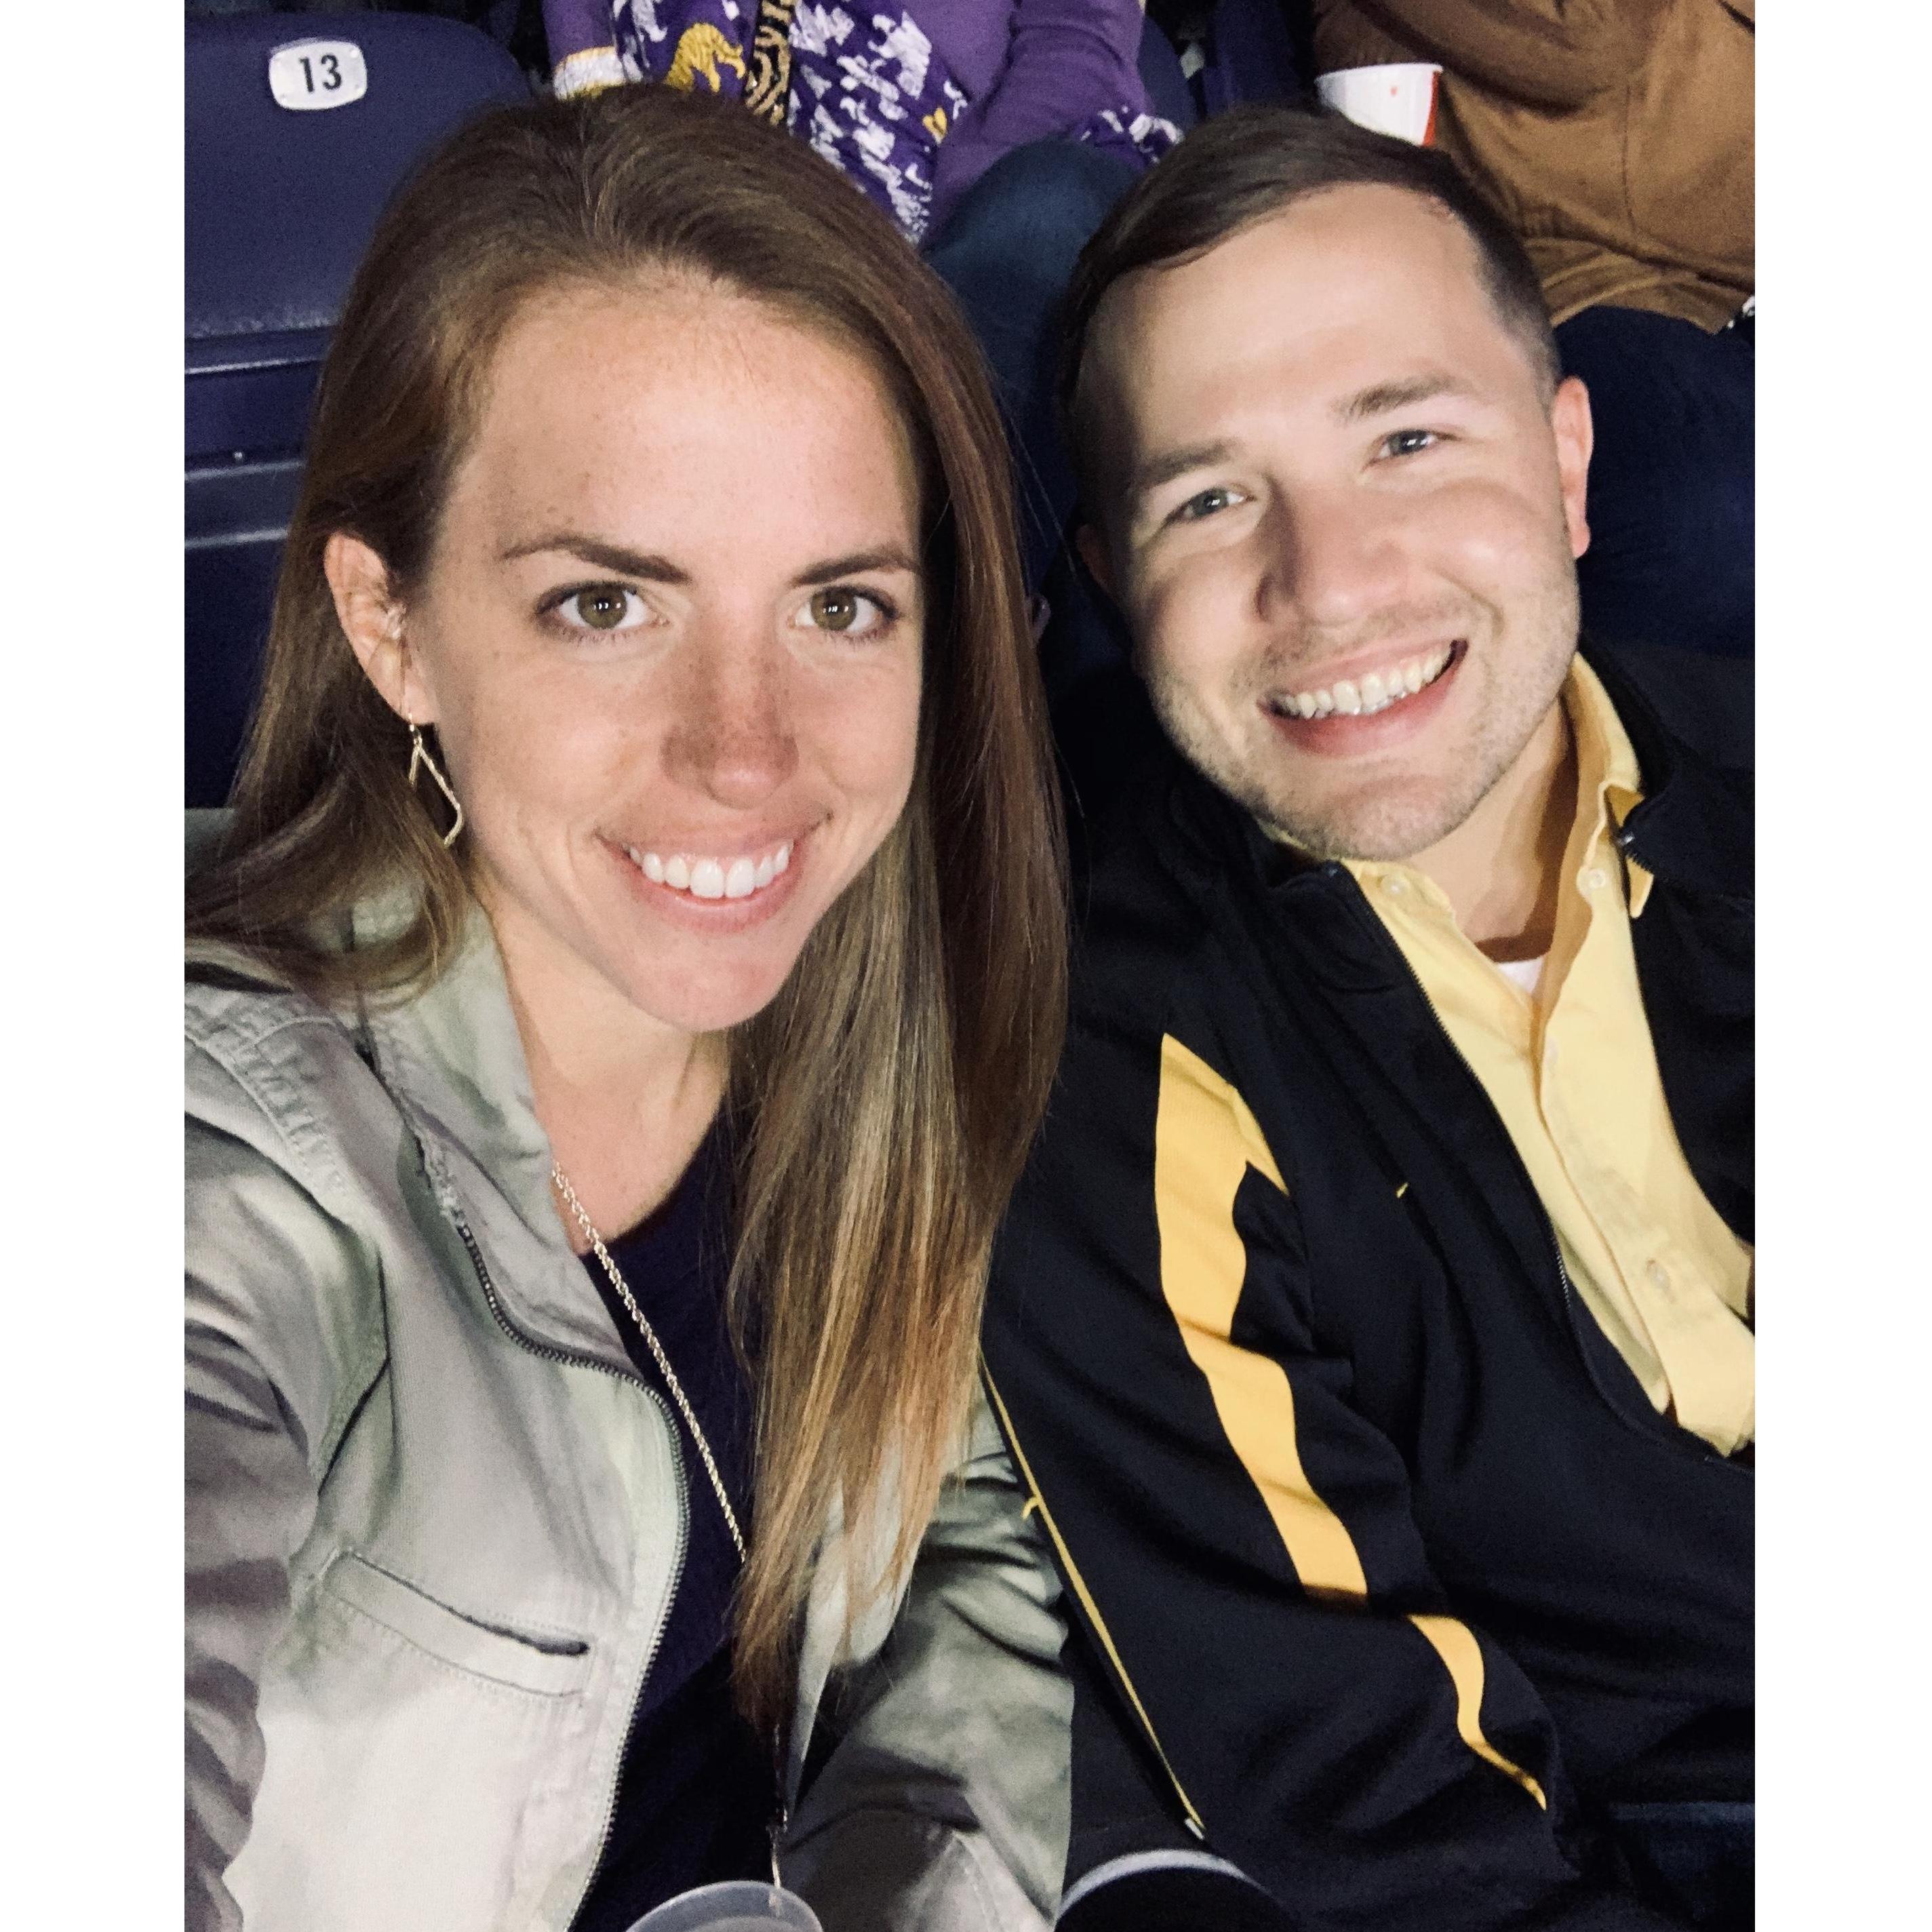 1st selfie - enjoying Gary's seats at the LSU vs Arkansas on 11/23/2019.